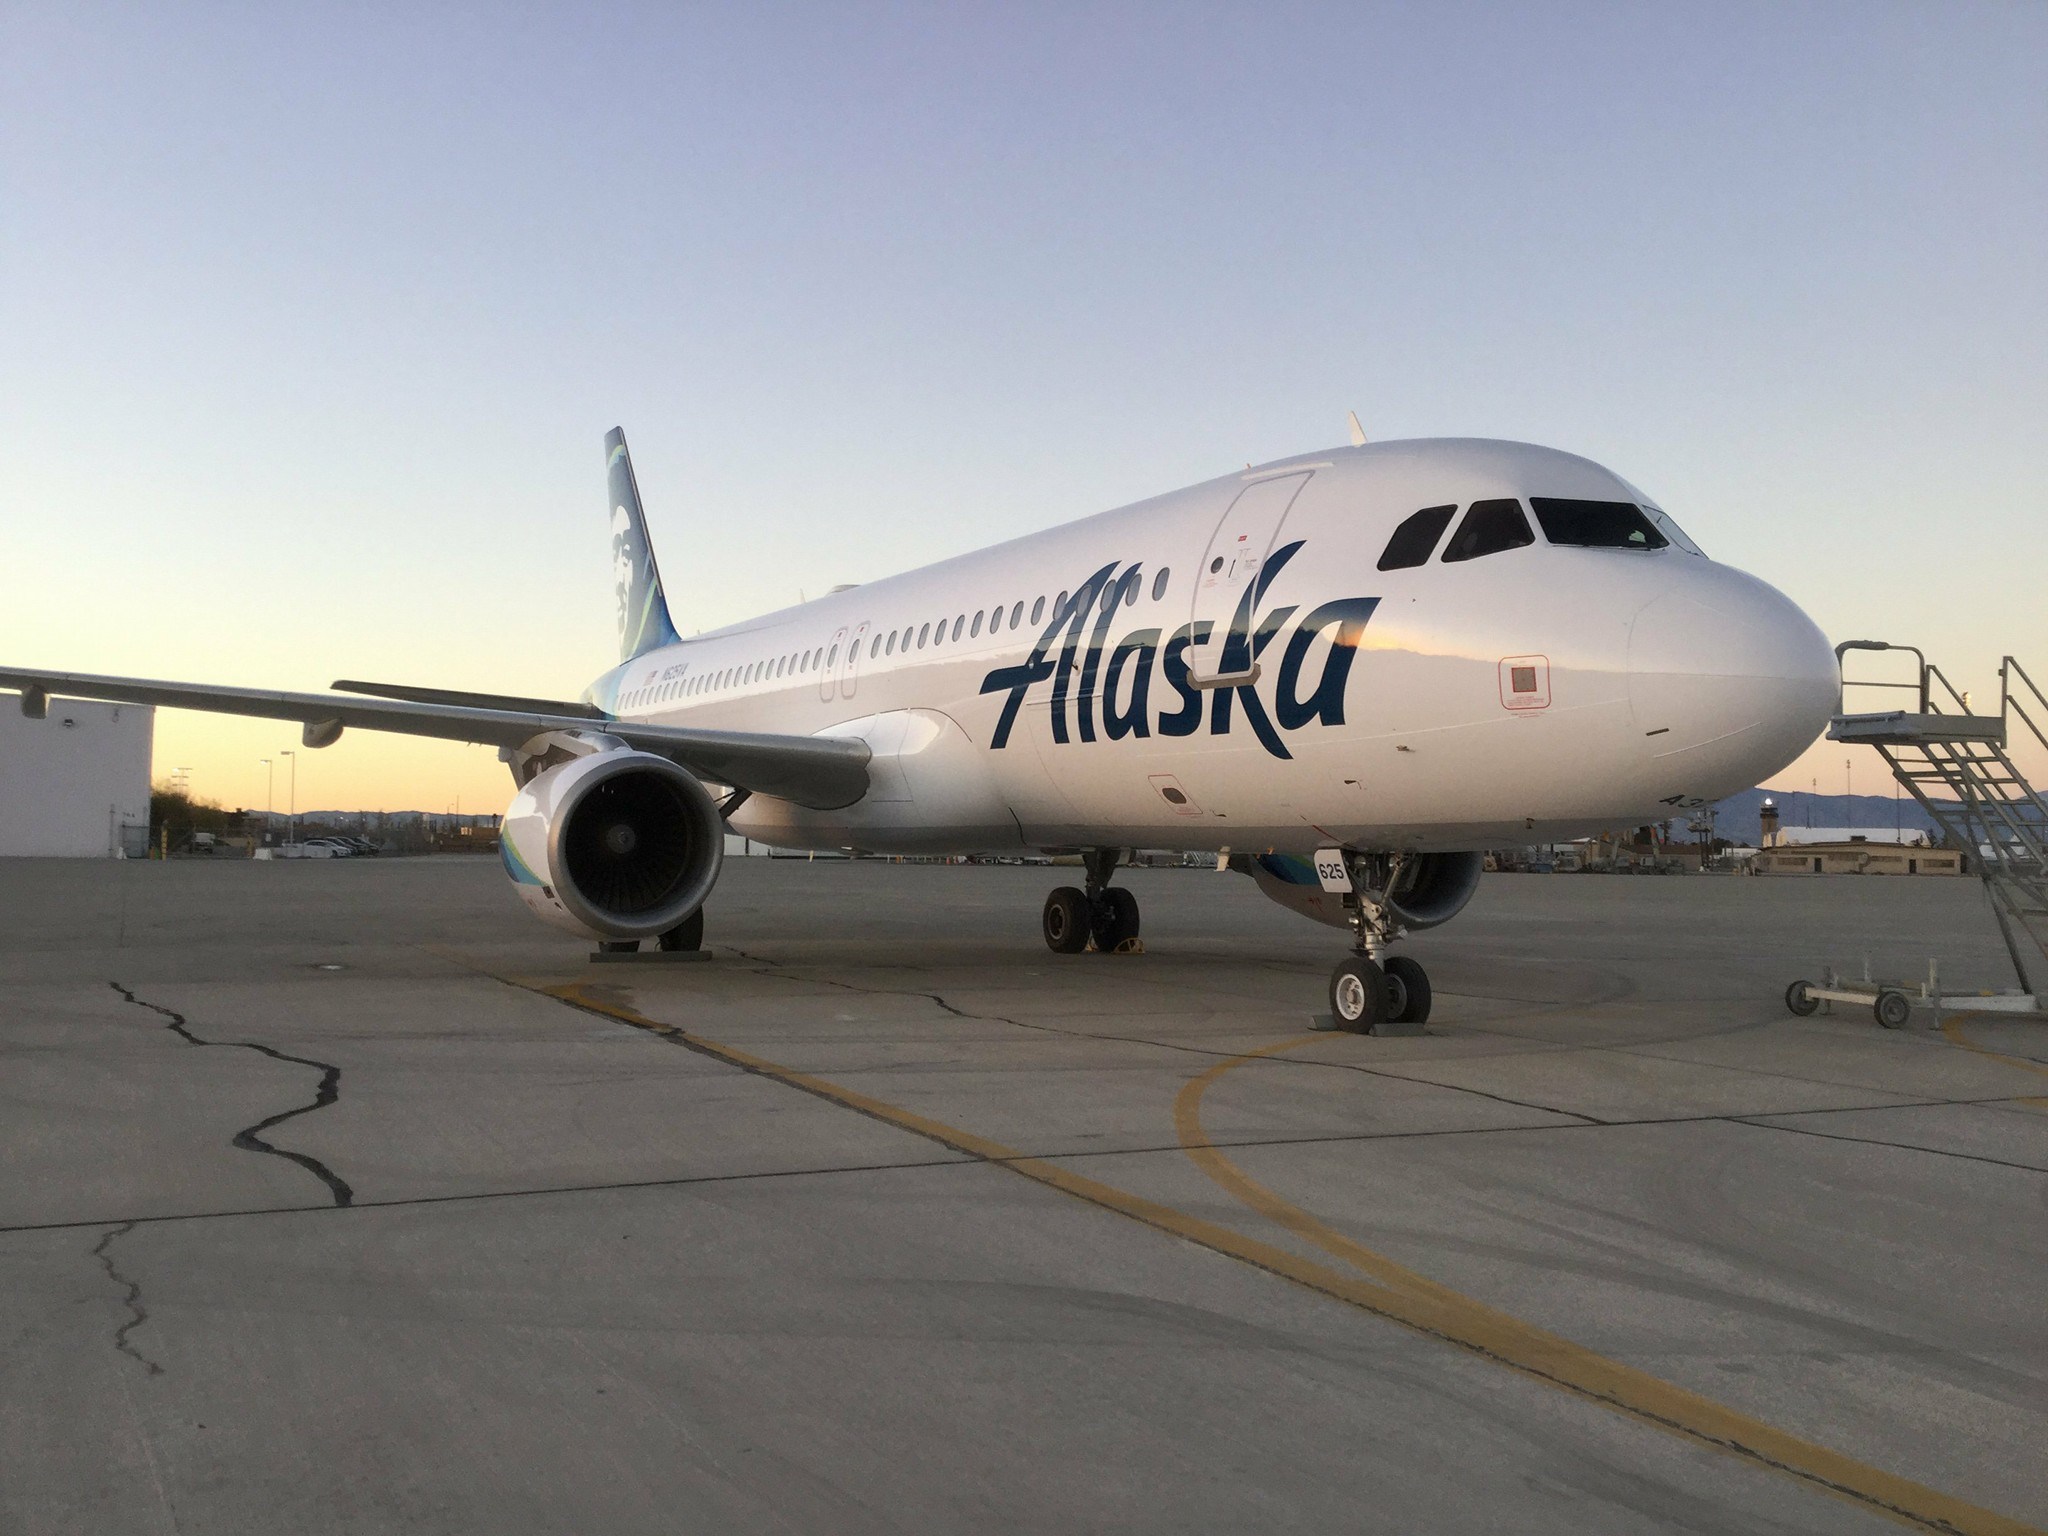 Alaska retires Virgin America flight numbers